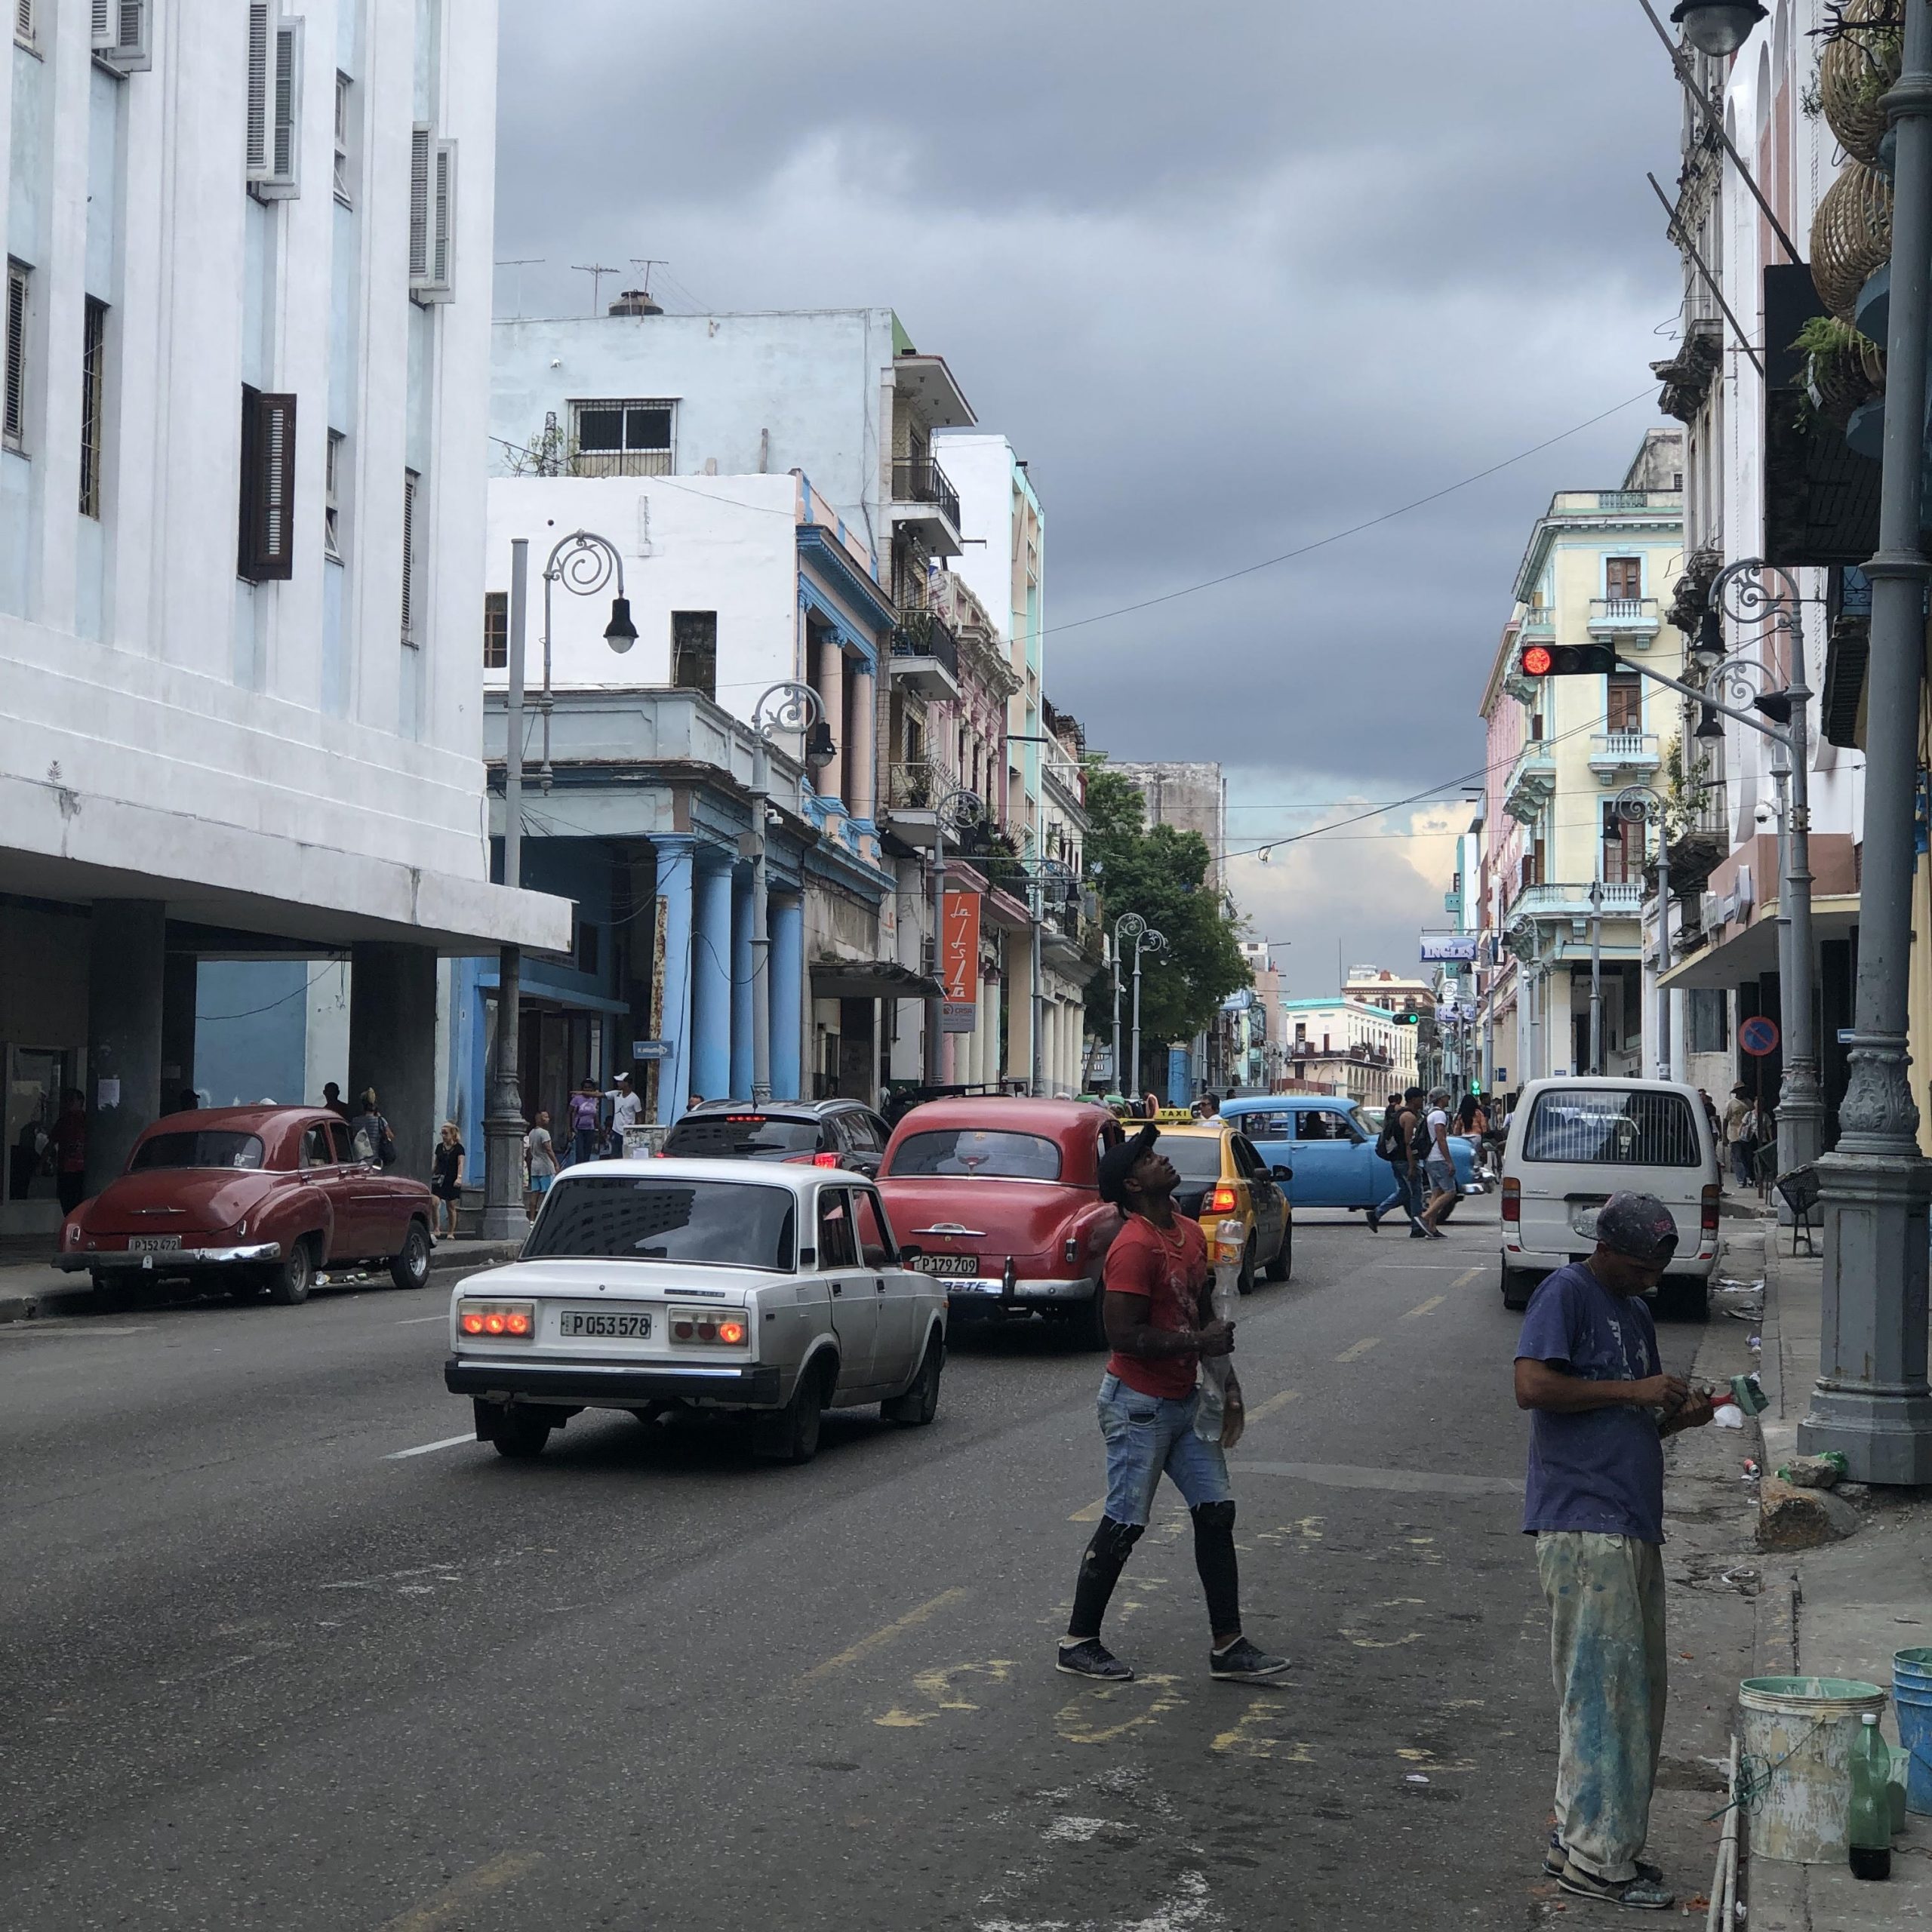 Travel Diaries on an iPhone: Cuba